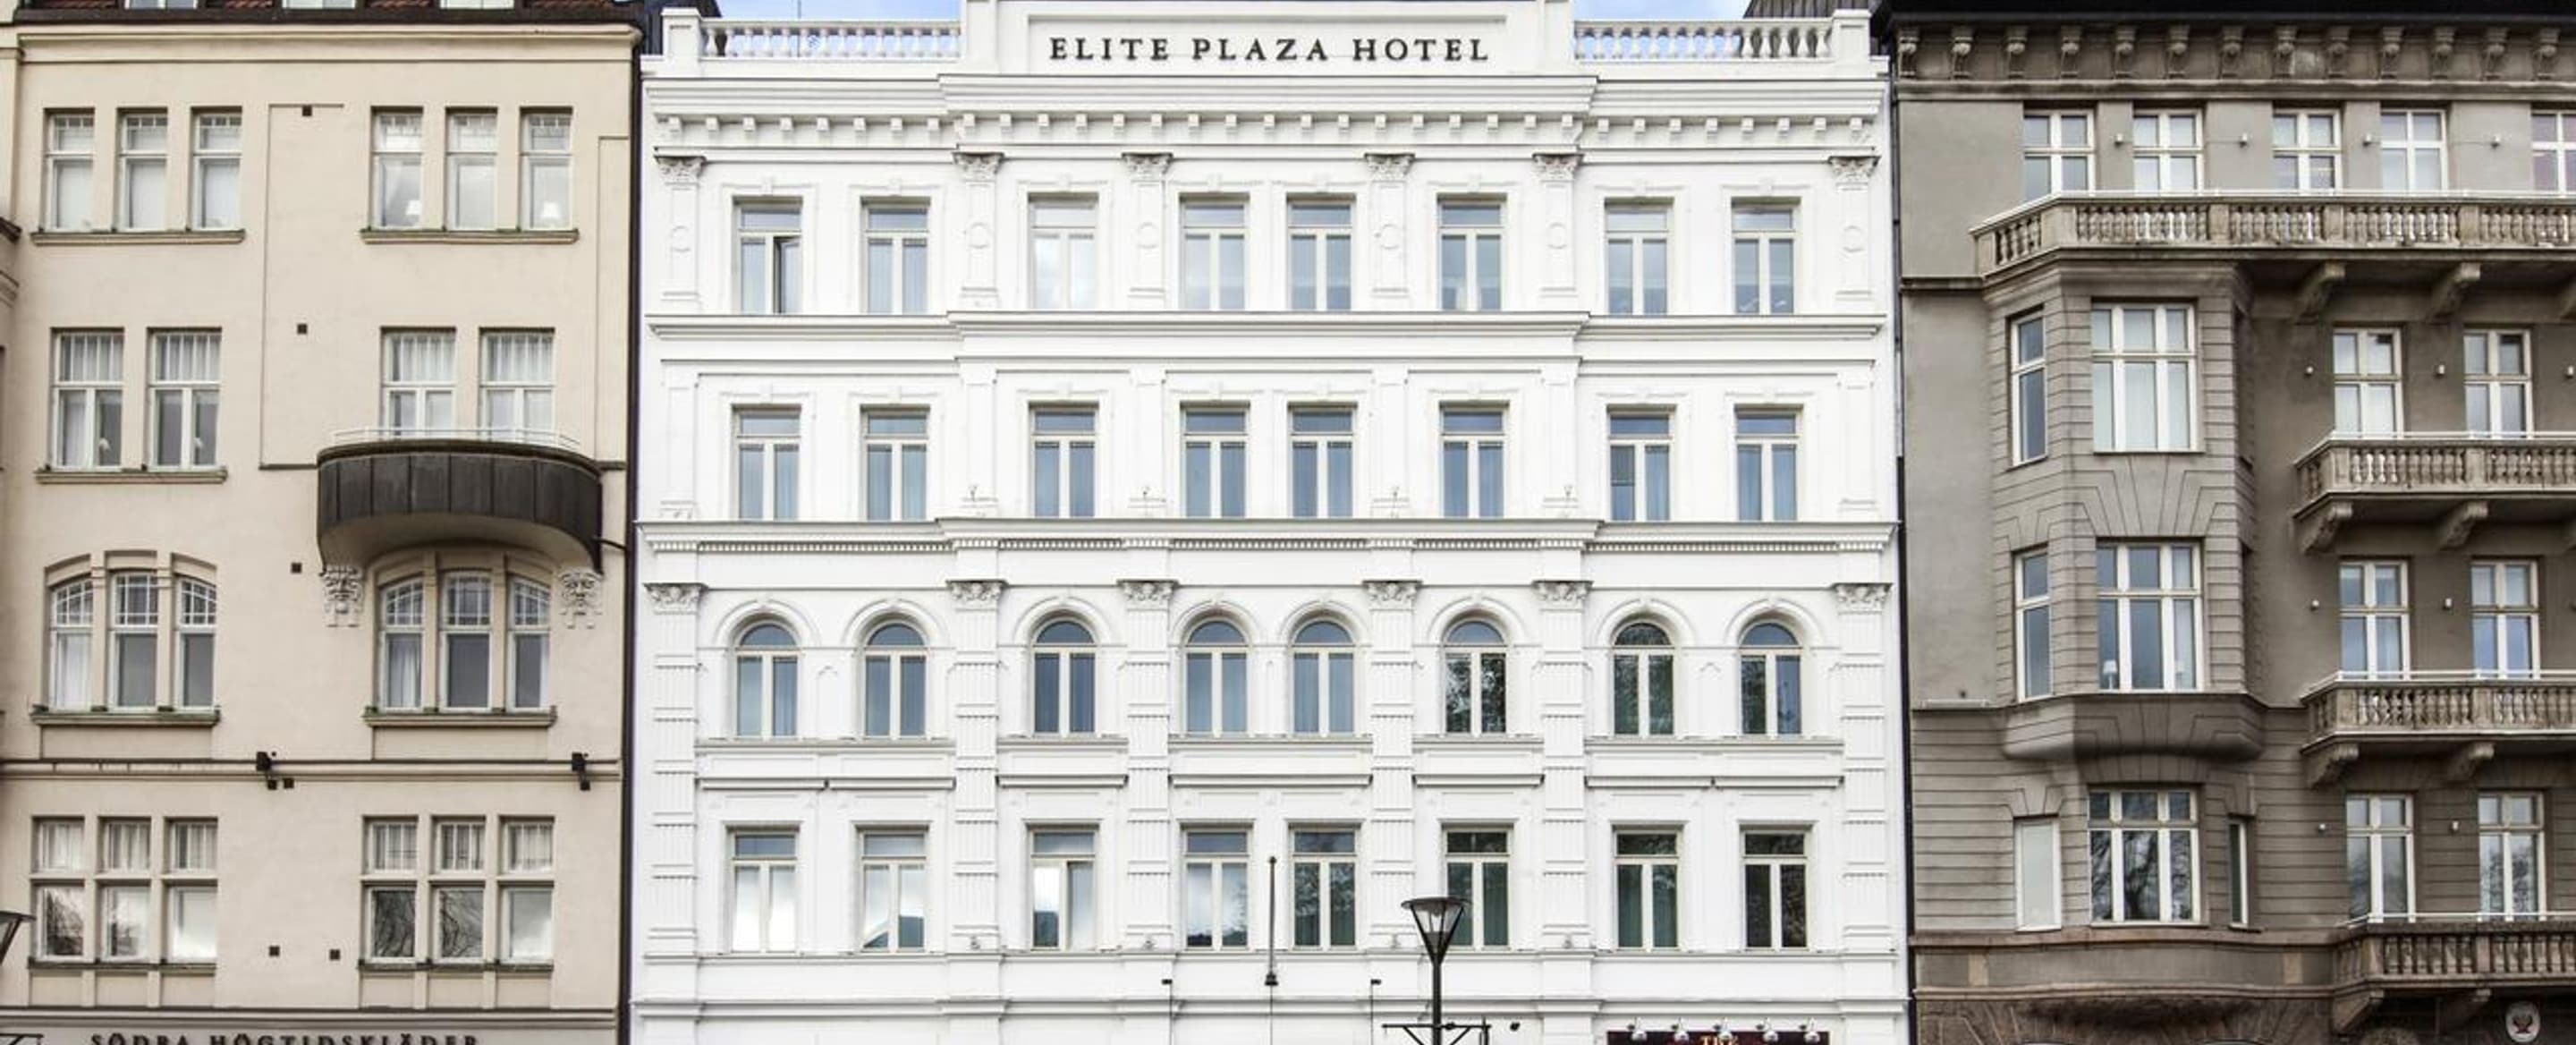 Elite Hotels of Sweden joins the Oaky family